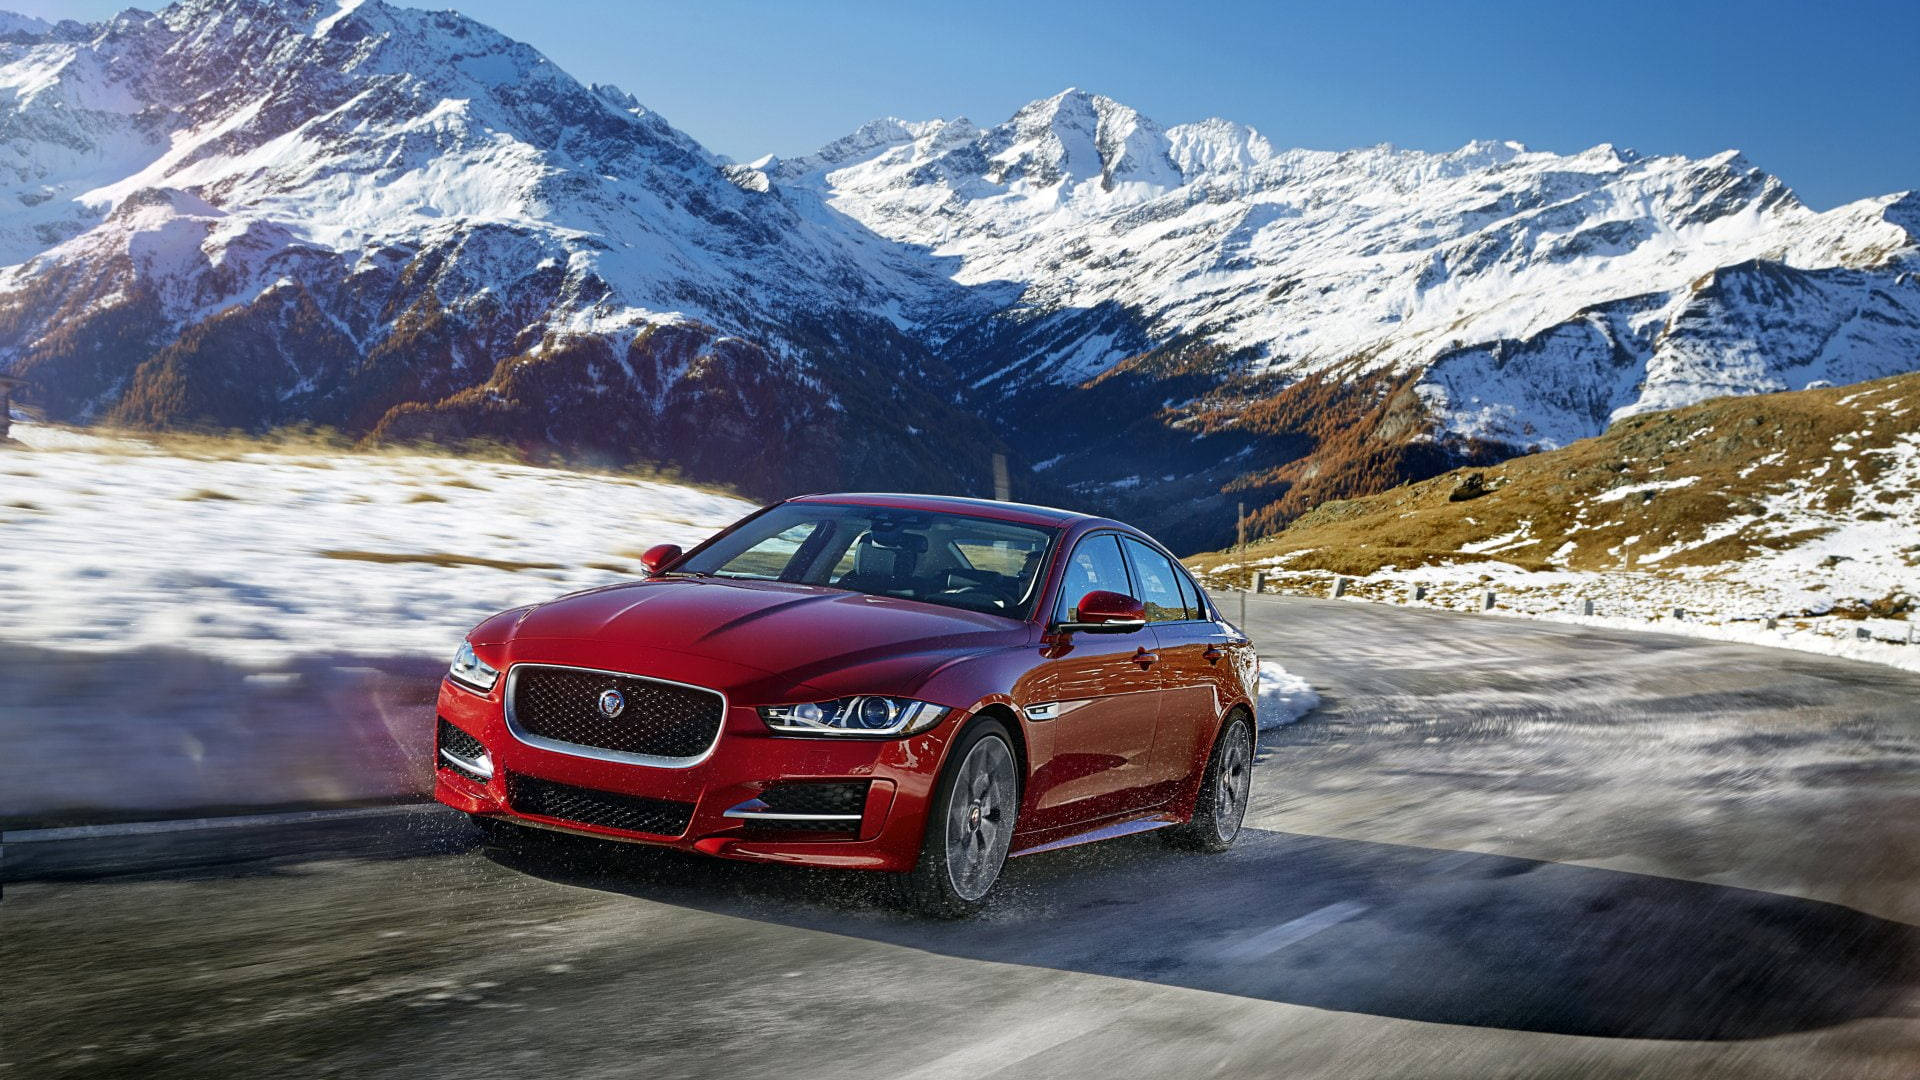 “a Red Jaguar Car Speeding Through A Mountain Range.” Background